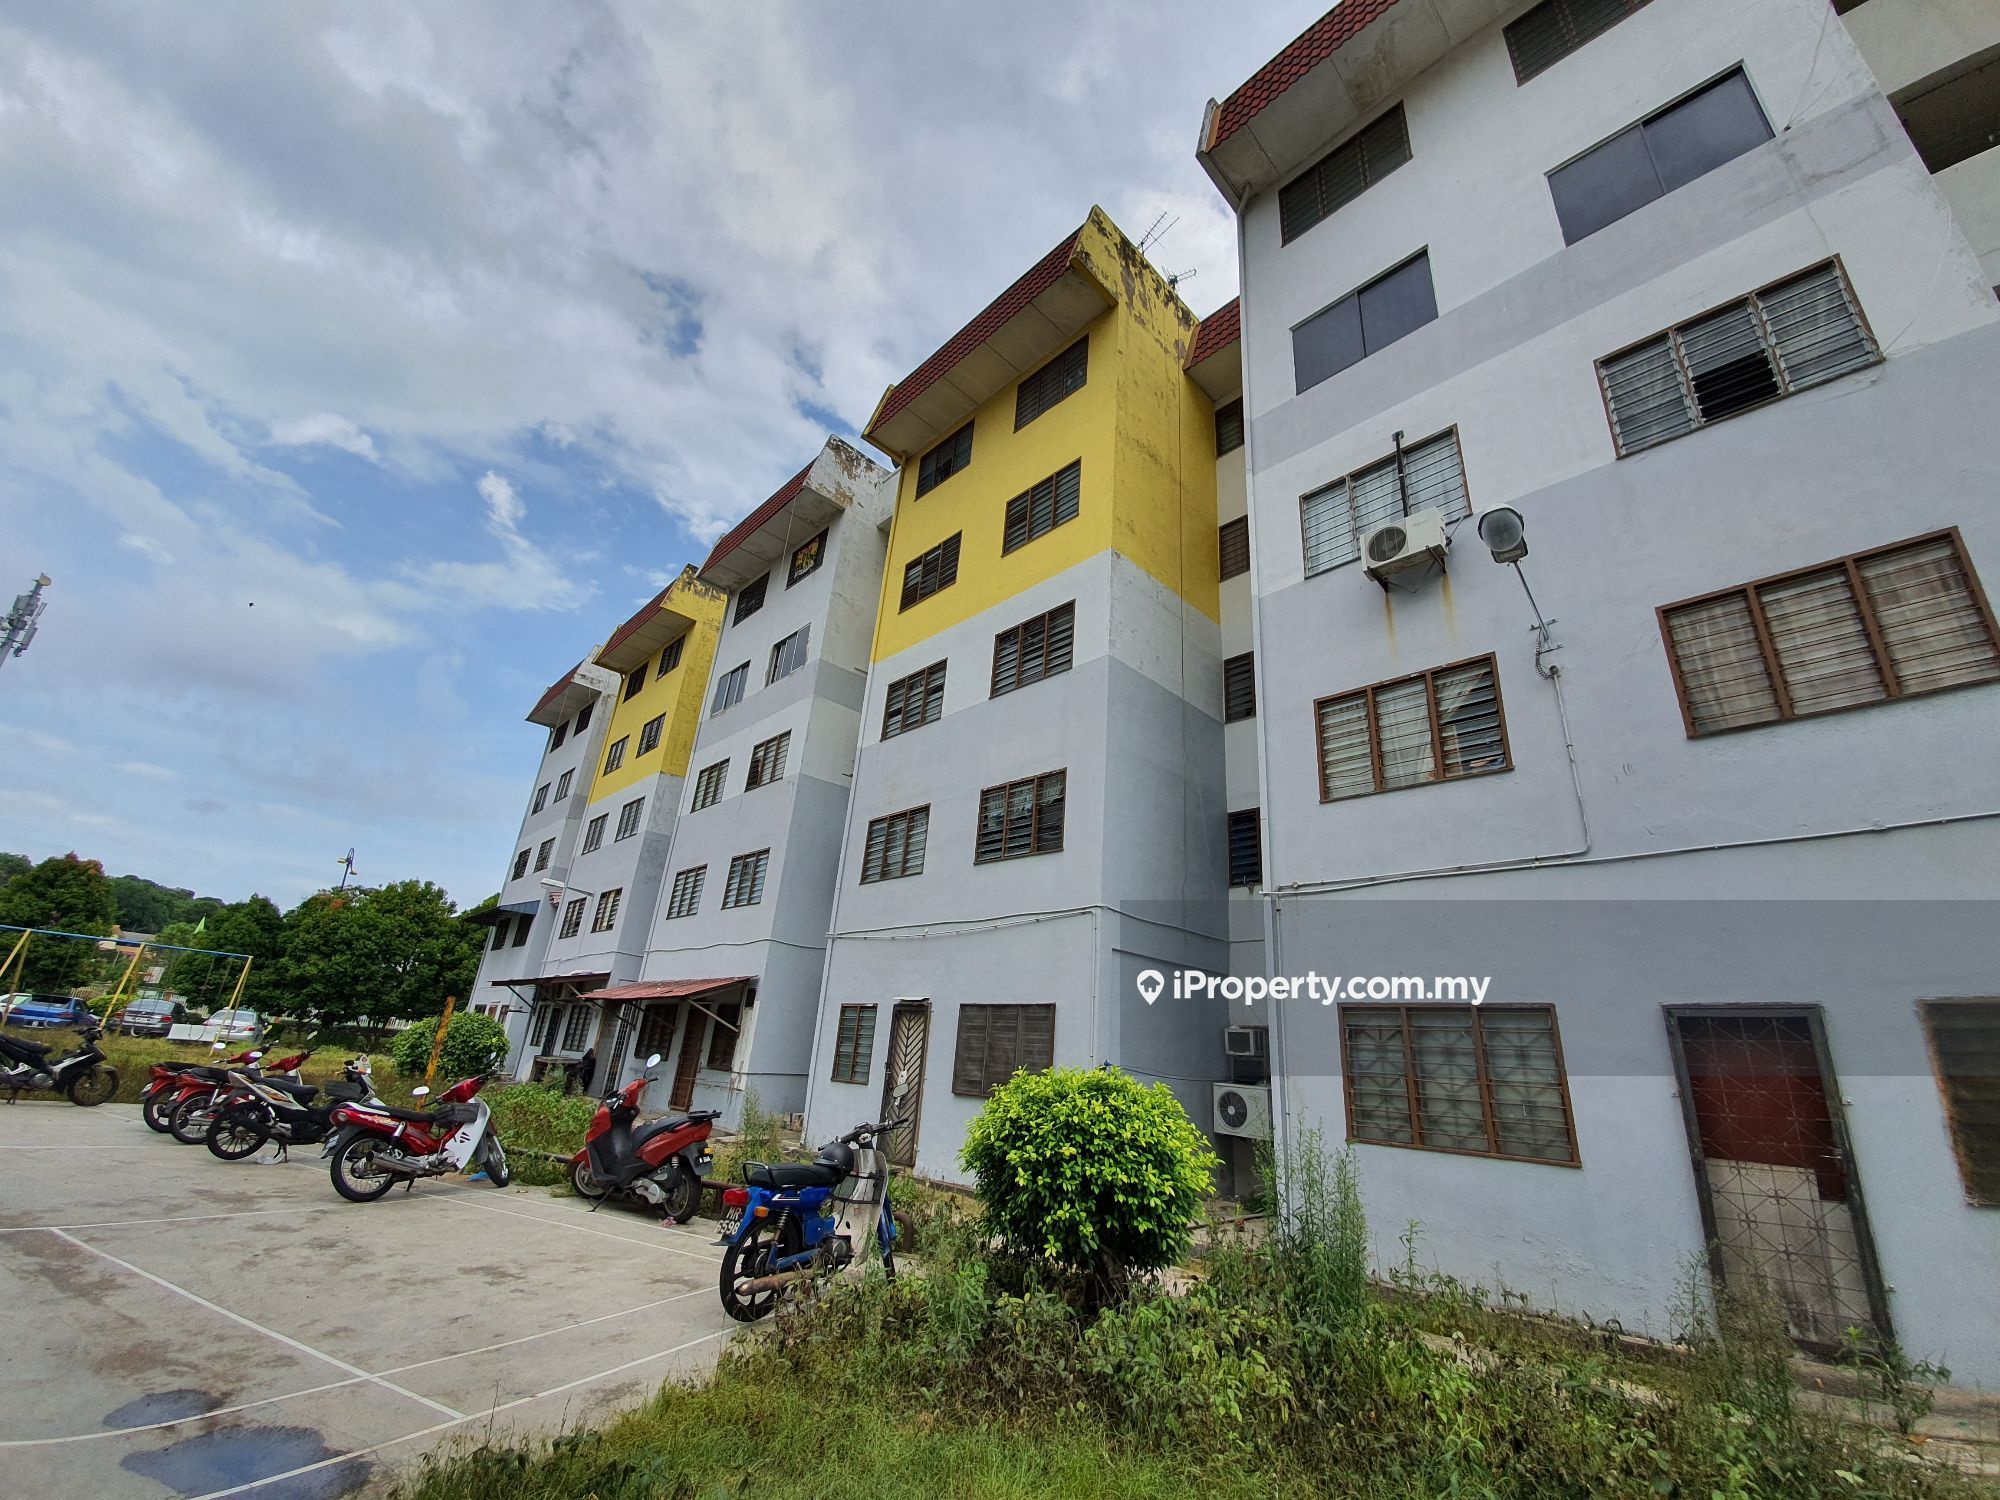 Rumah Pangsa Batu Berendam Corner Lot Flat 2 Bedrooms For Sale In Bukit Baru Melaka Iproperty Com My